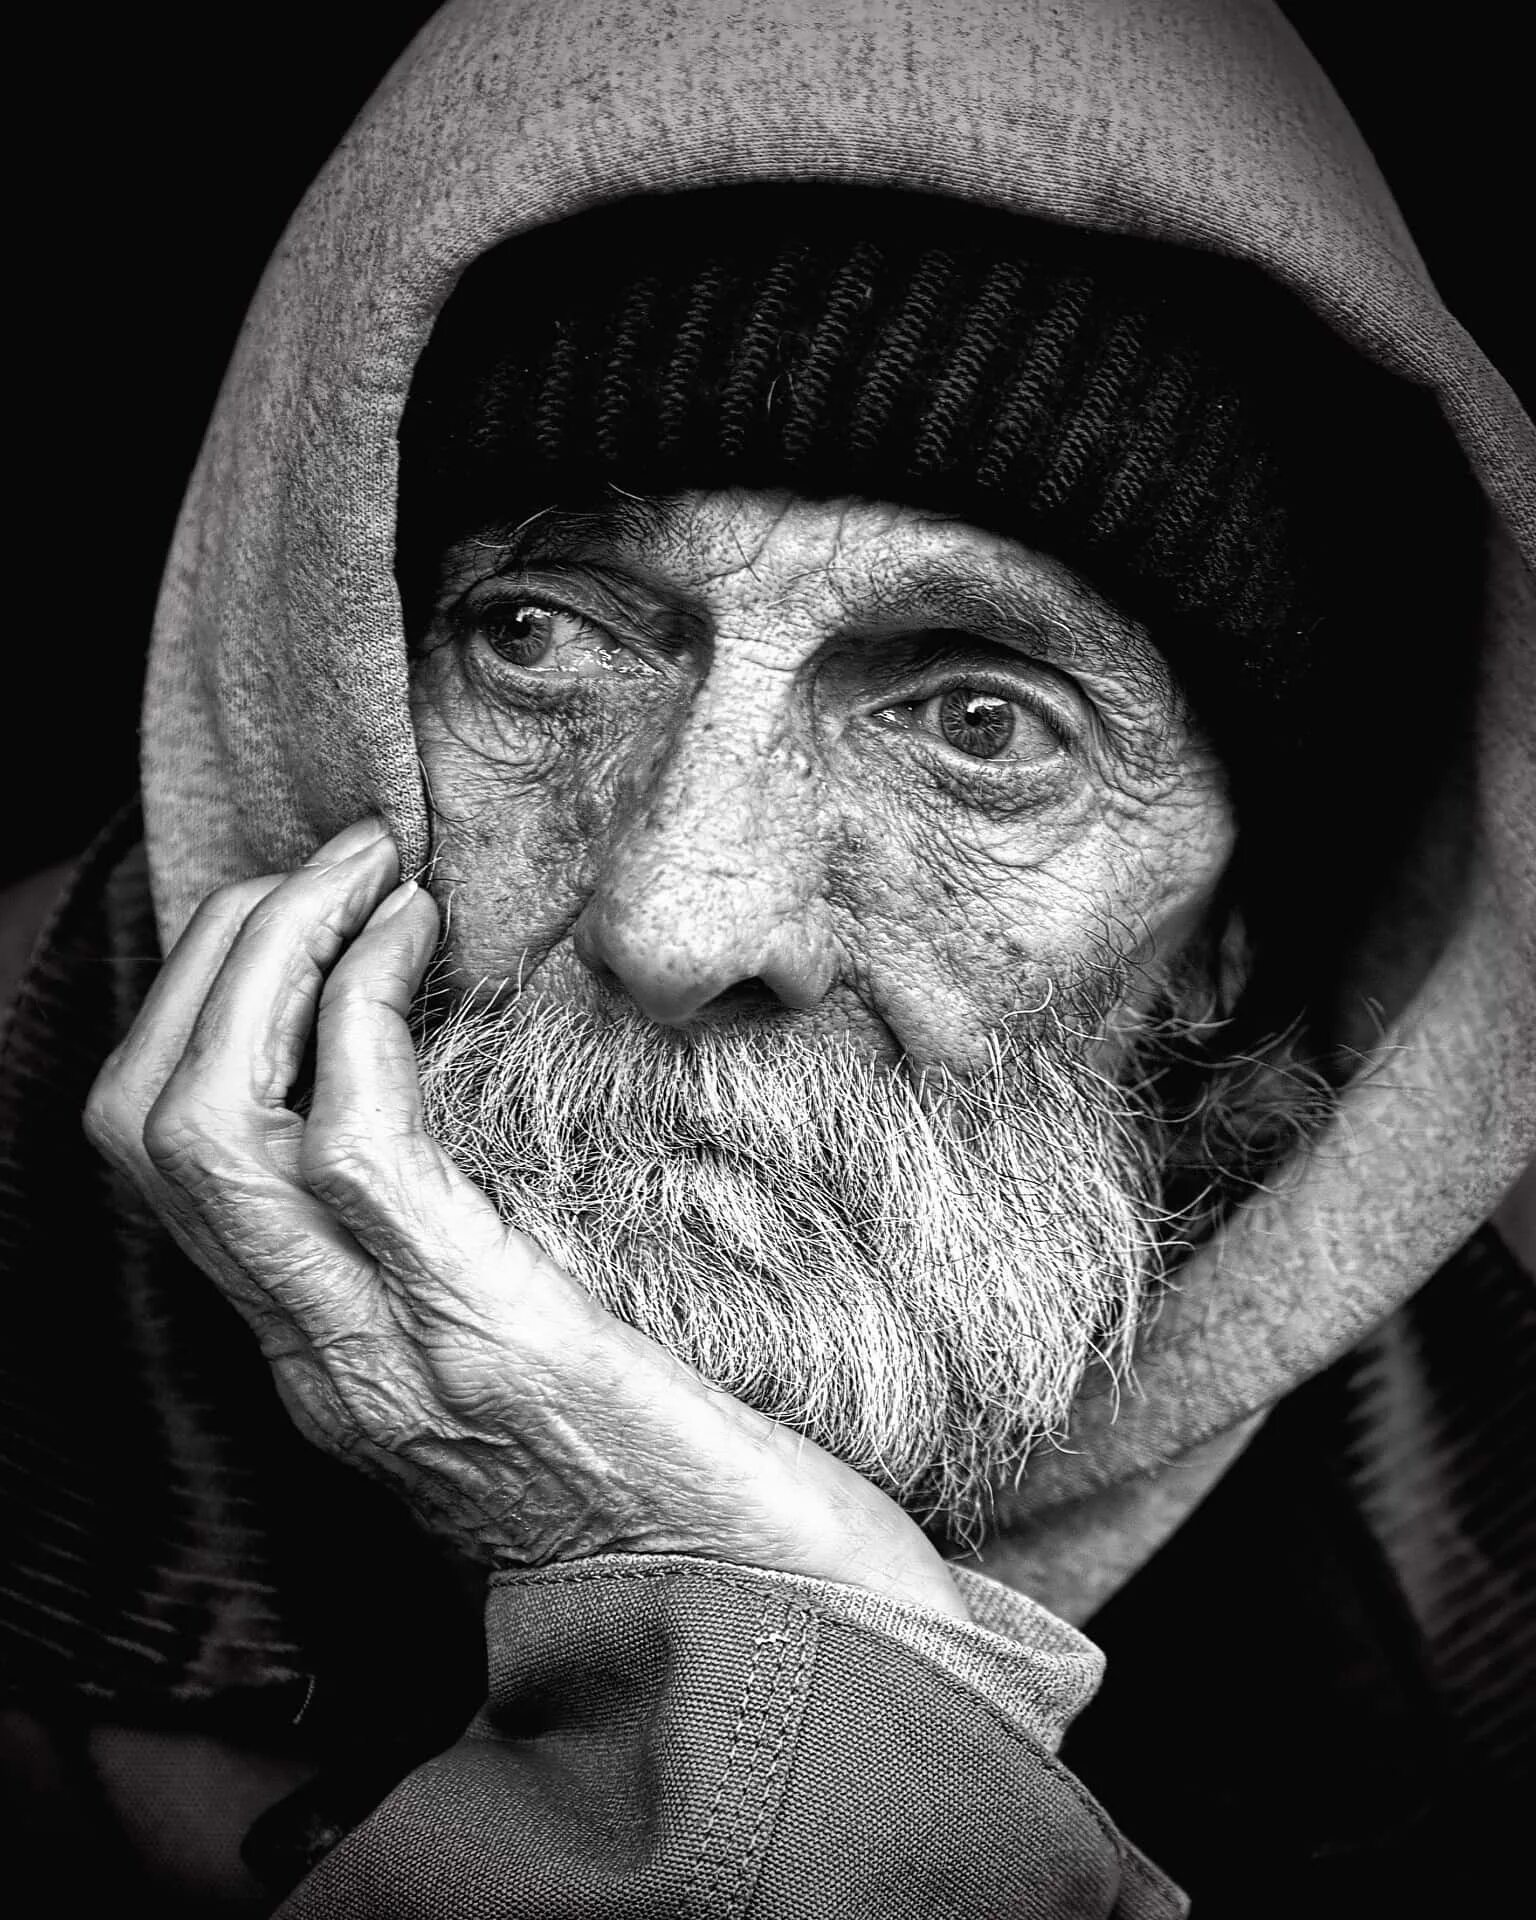 Лицо старика. Фотопортрет дедушки. Бездомный старик. Старик бомж.